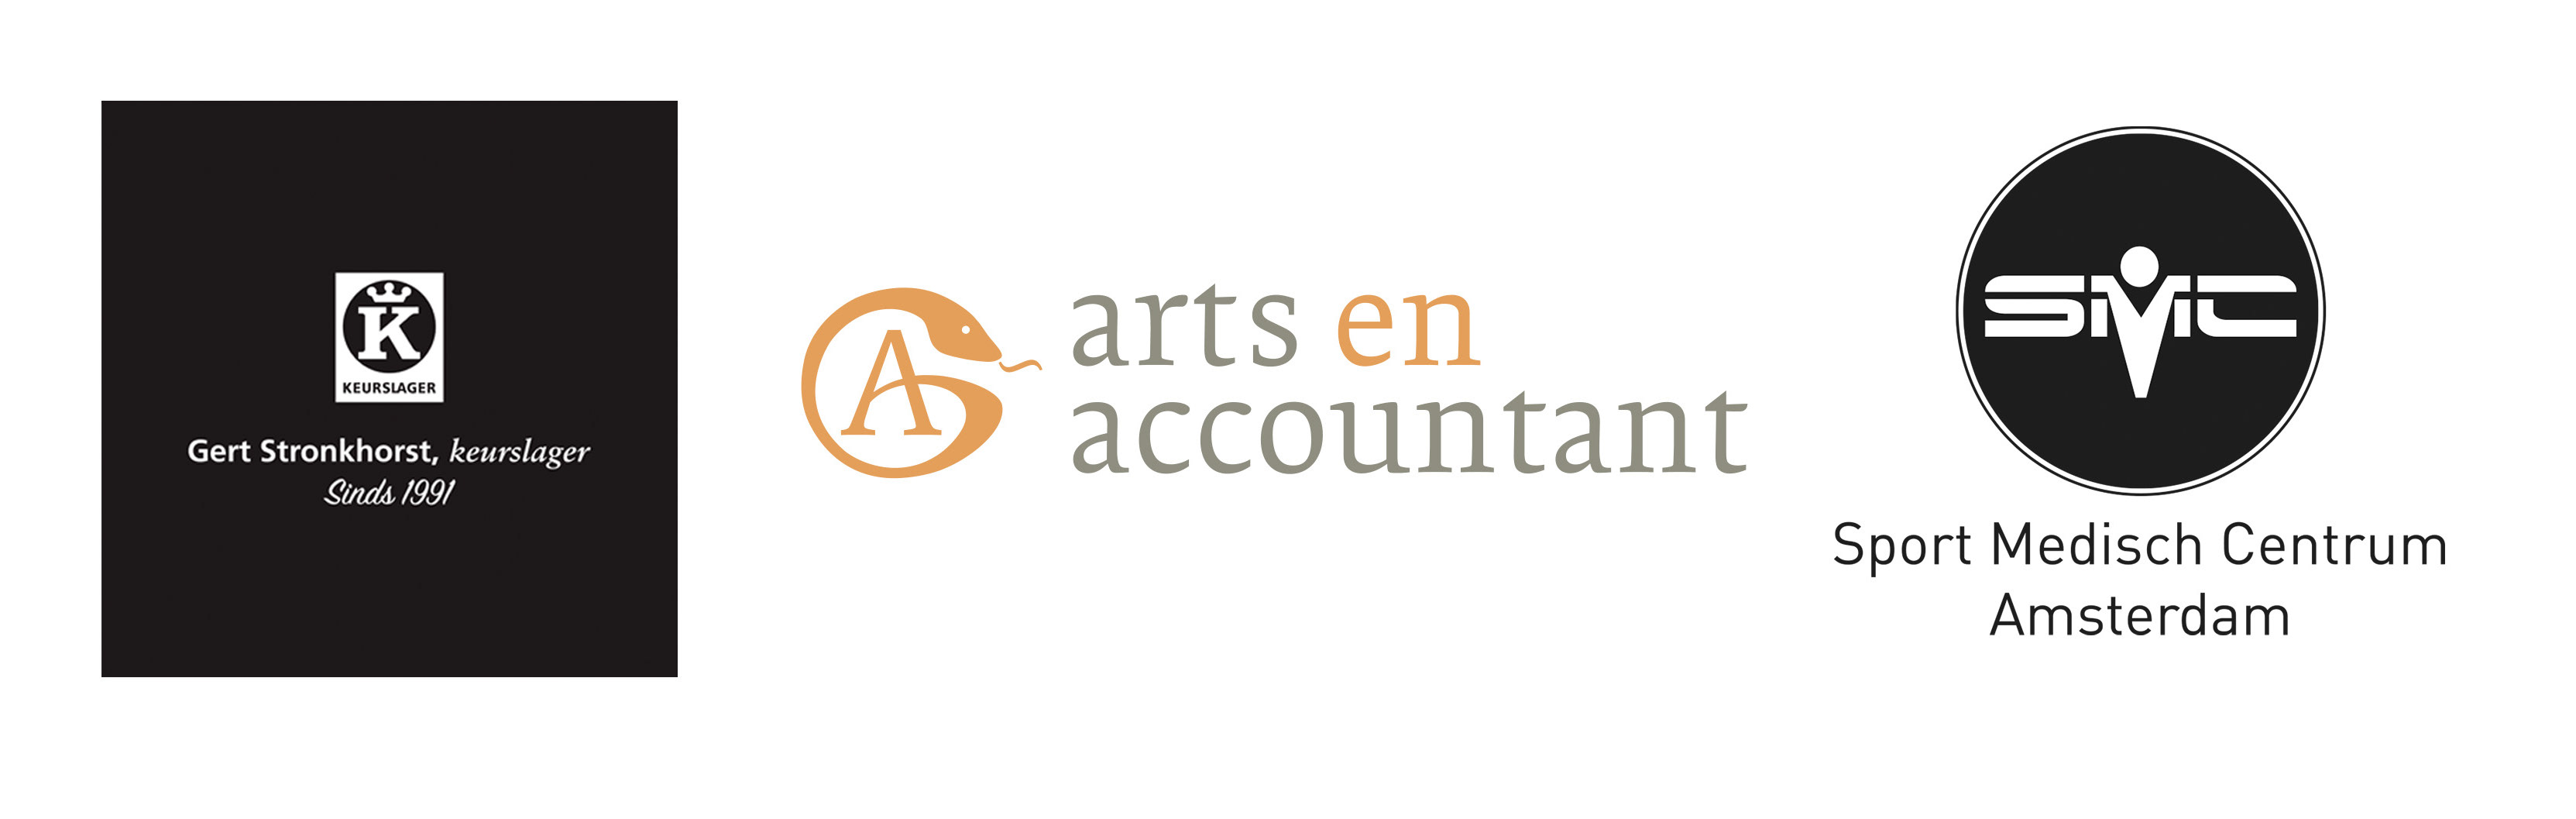 Logo SMC & Gert Stronthorst & Arts en Accountant